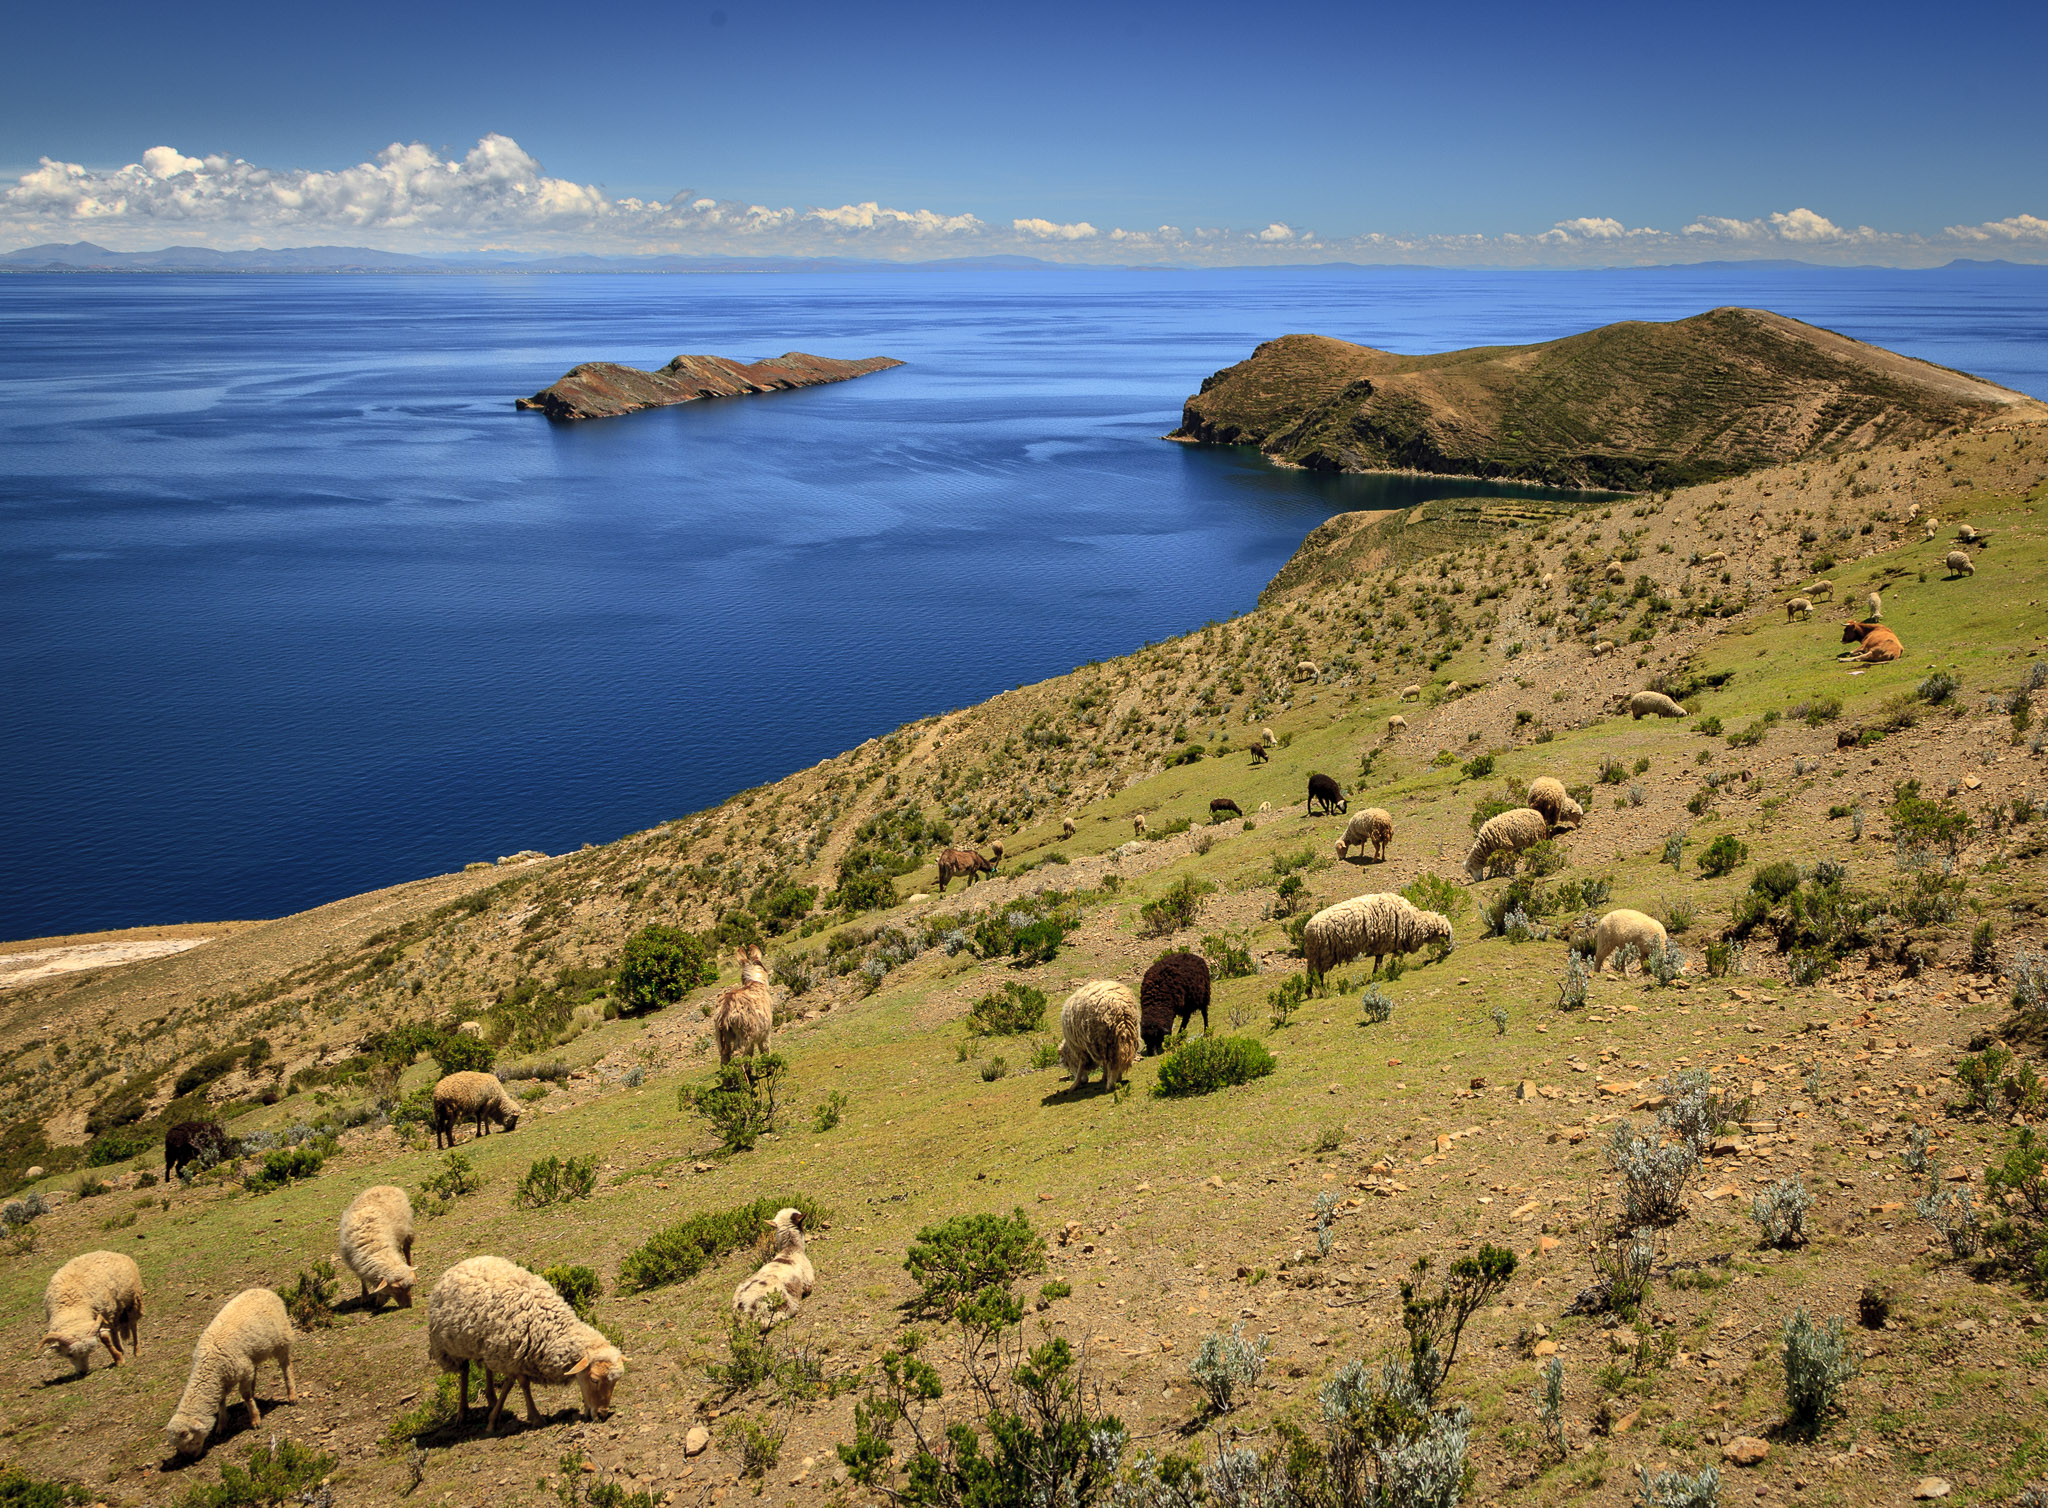 Island tip of Chincana behind sheep